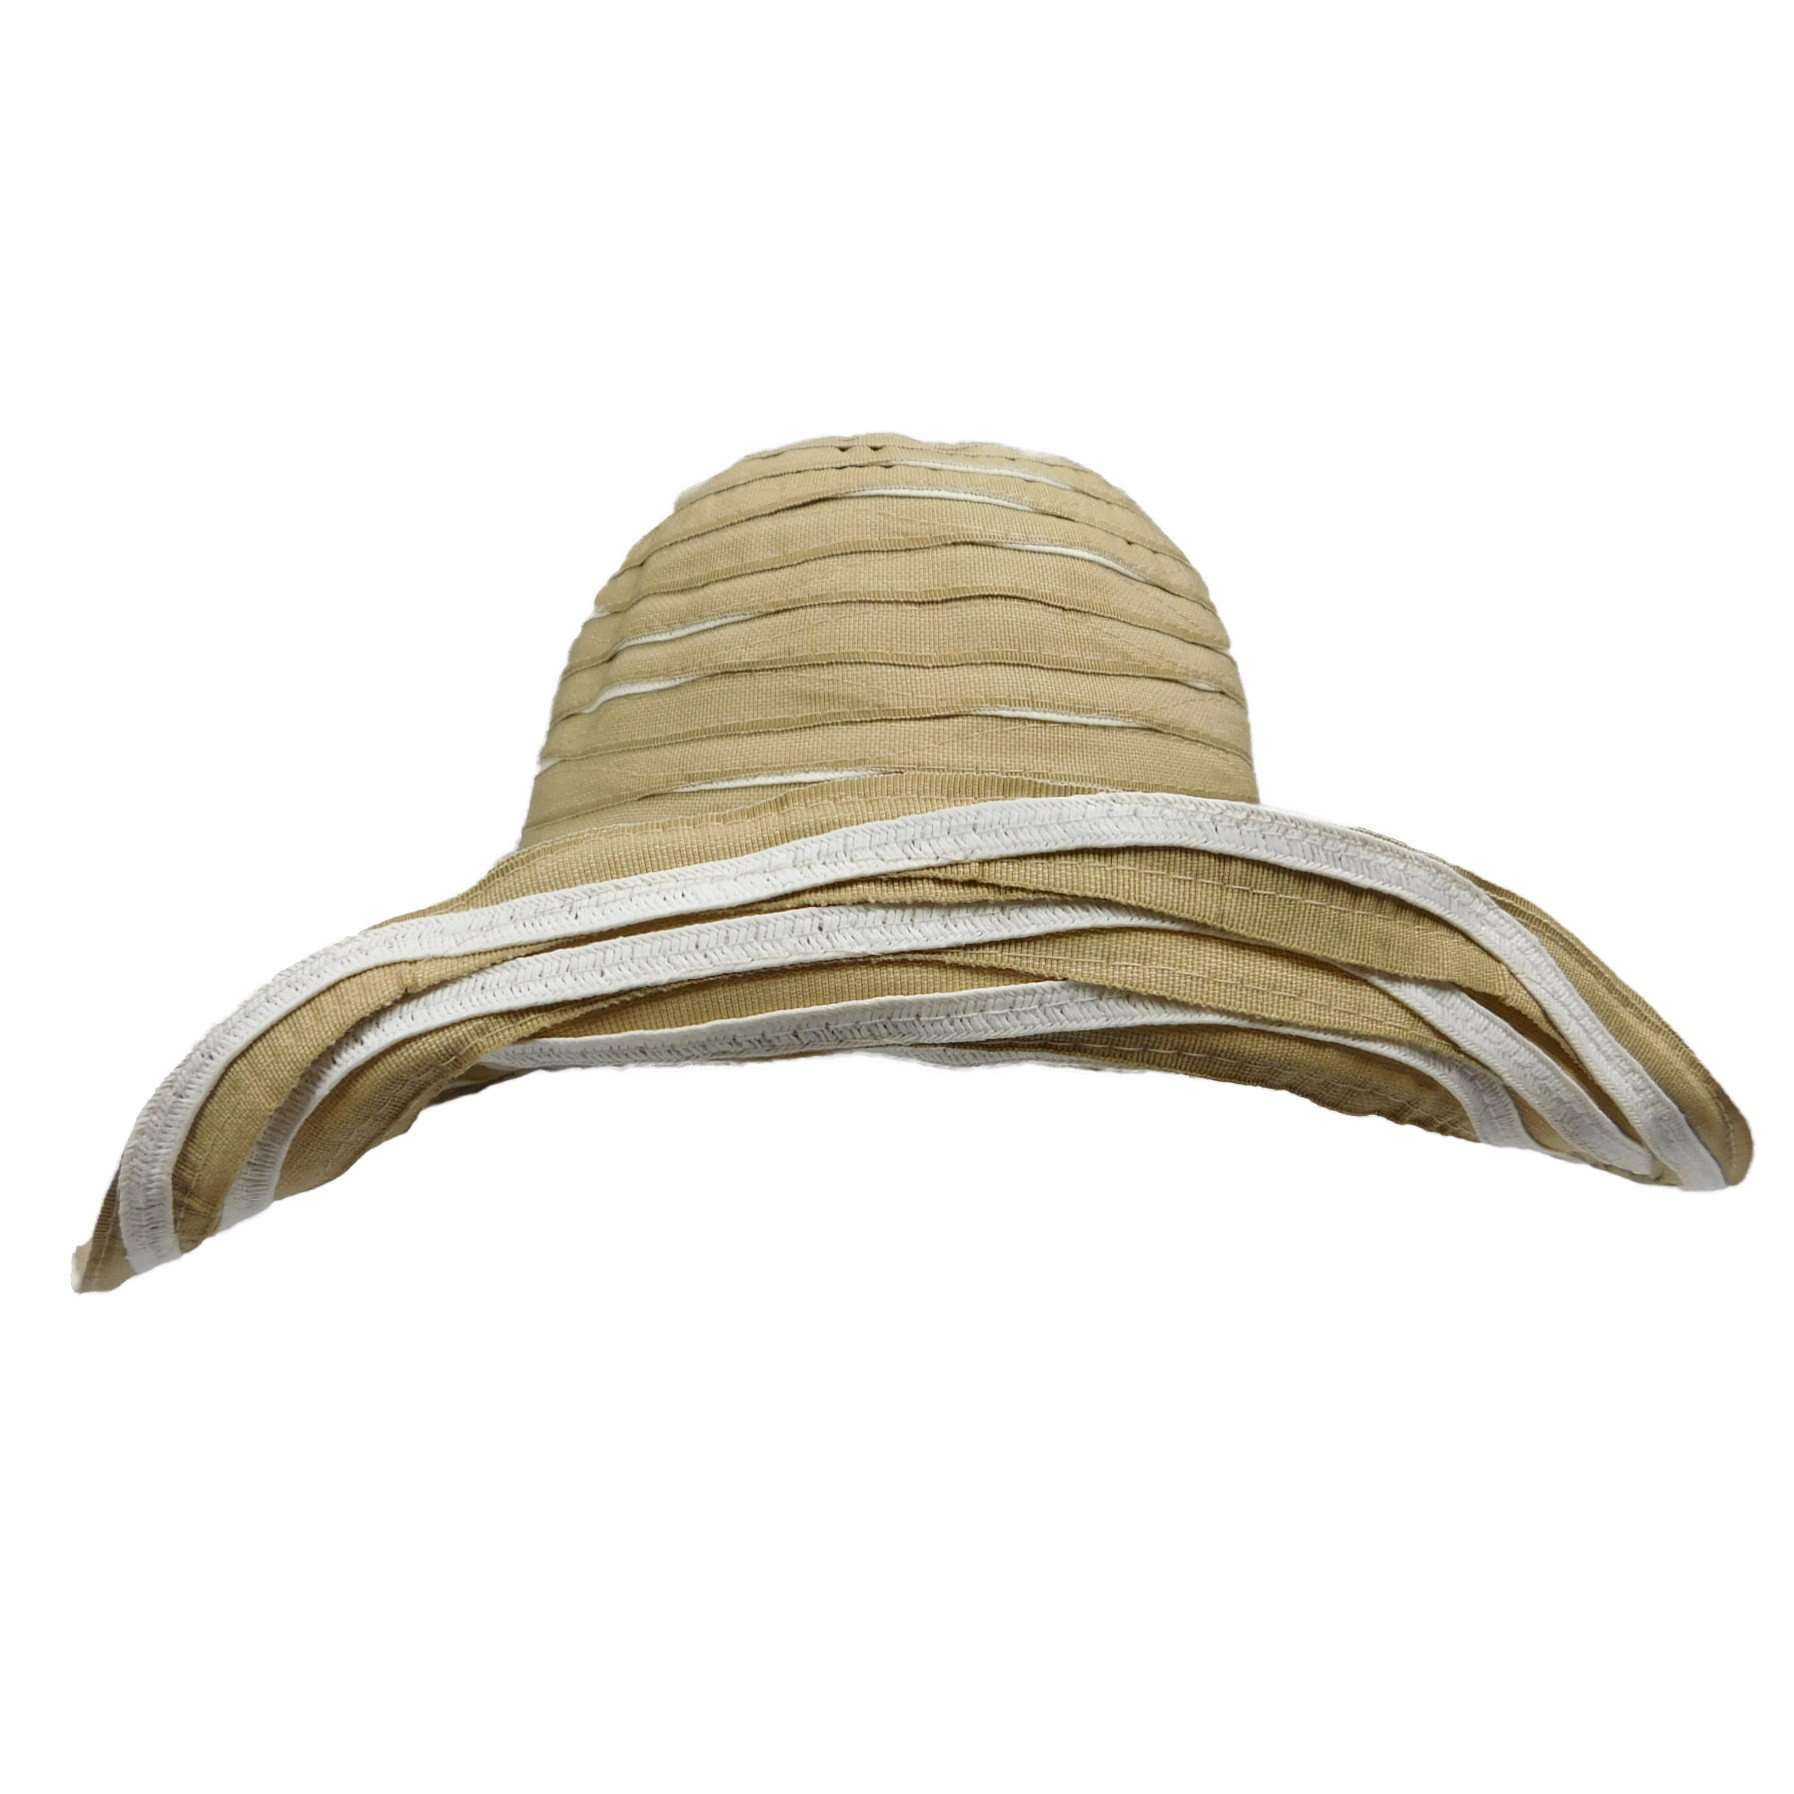 The Crusher Straw Hat